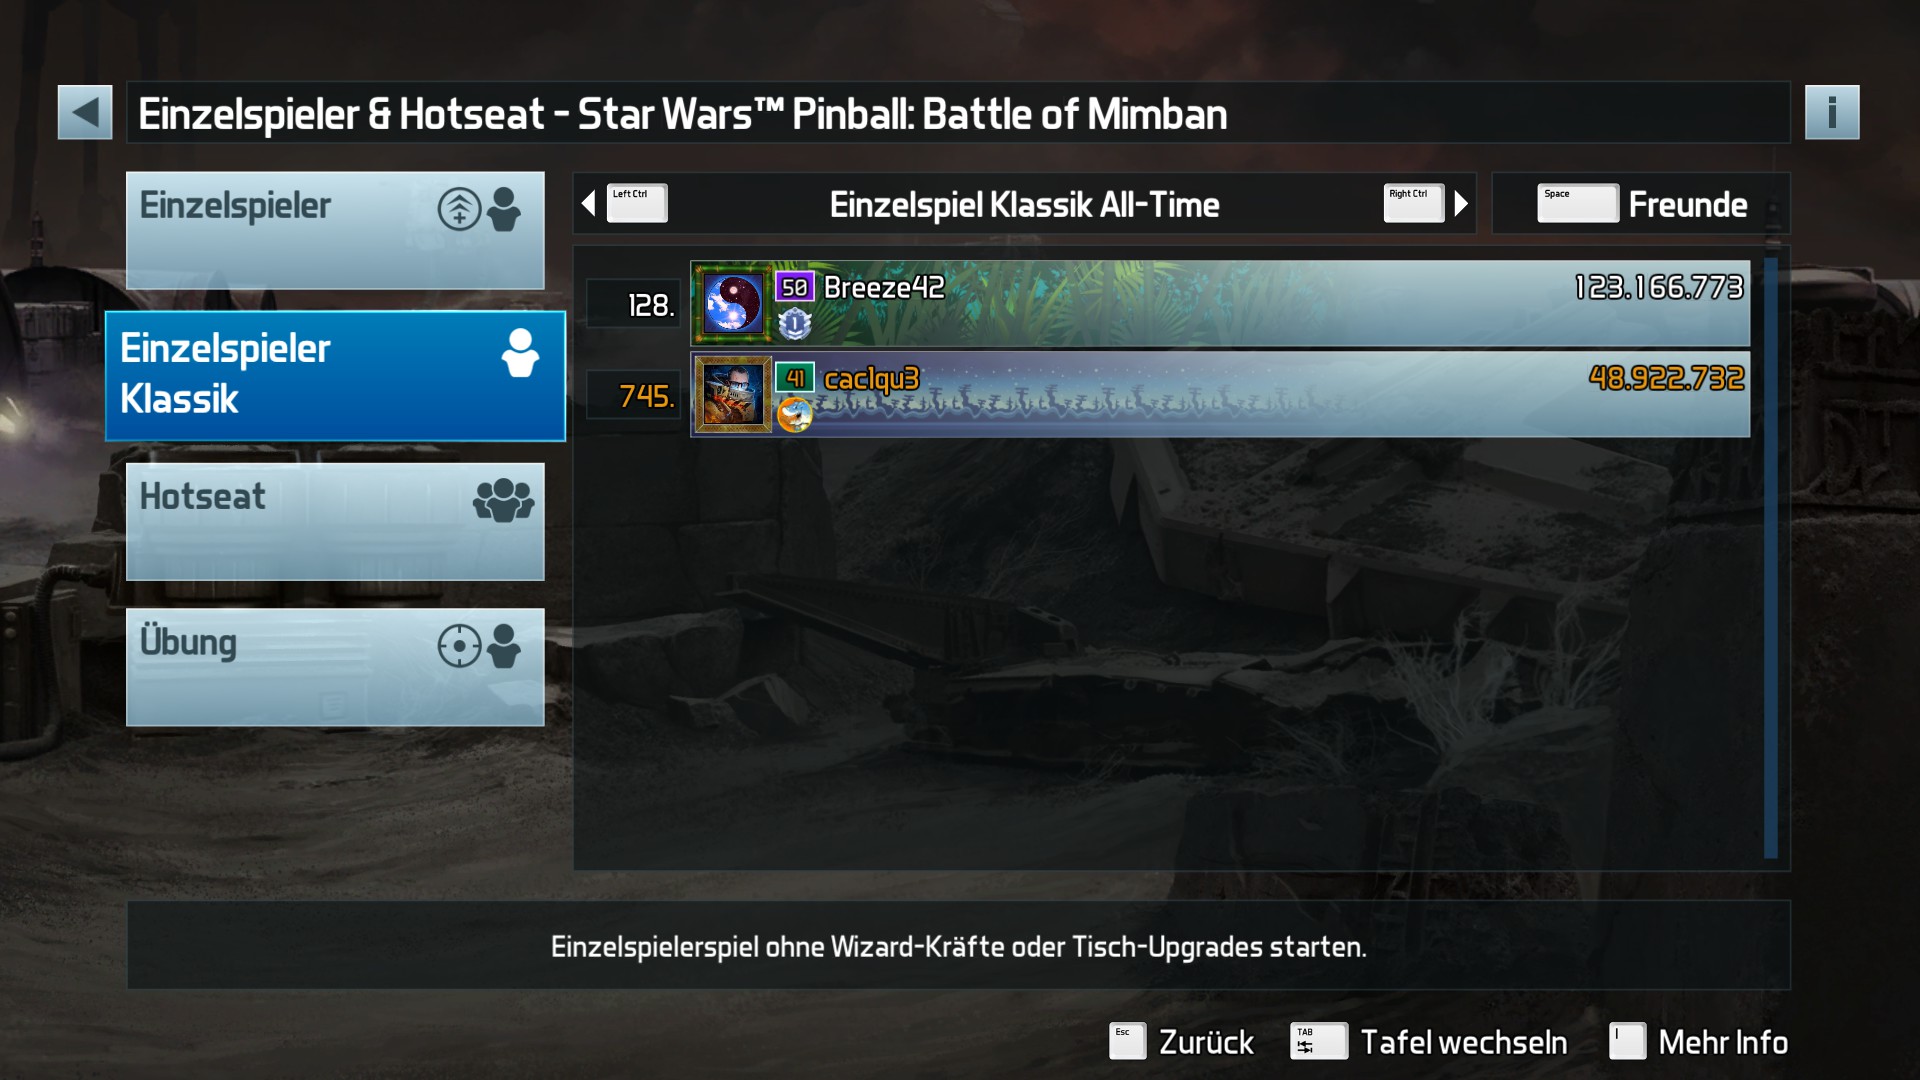 e2e4: Pinball FX3: Star Wars Pinball: Battle of Mimban [Classic] (PC) 48,922,732 points on 2022-05-19 02:03:49